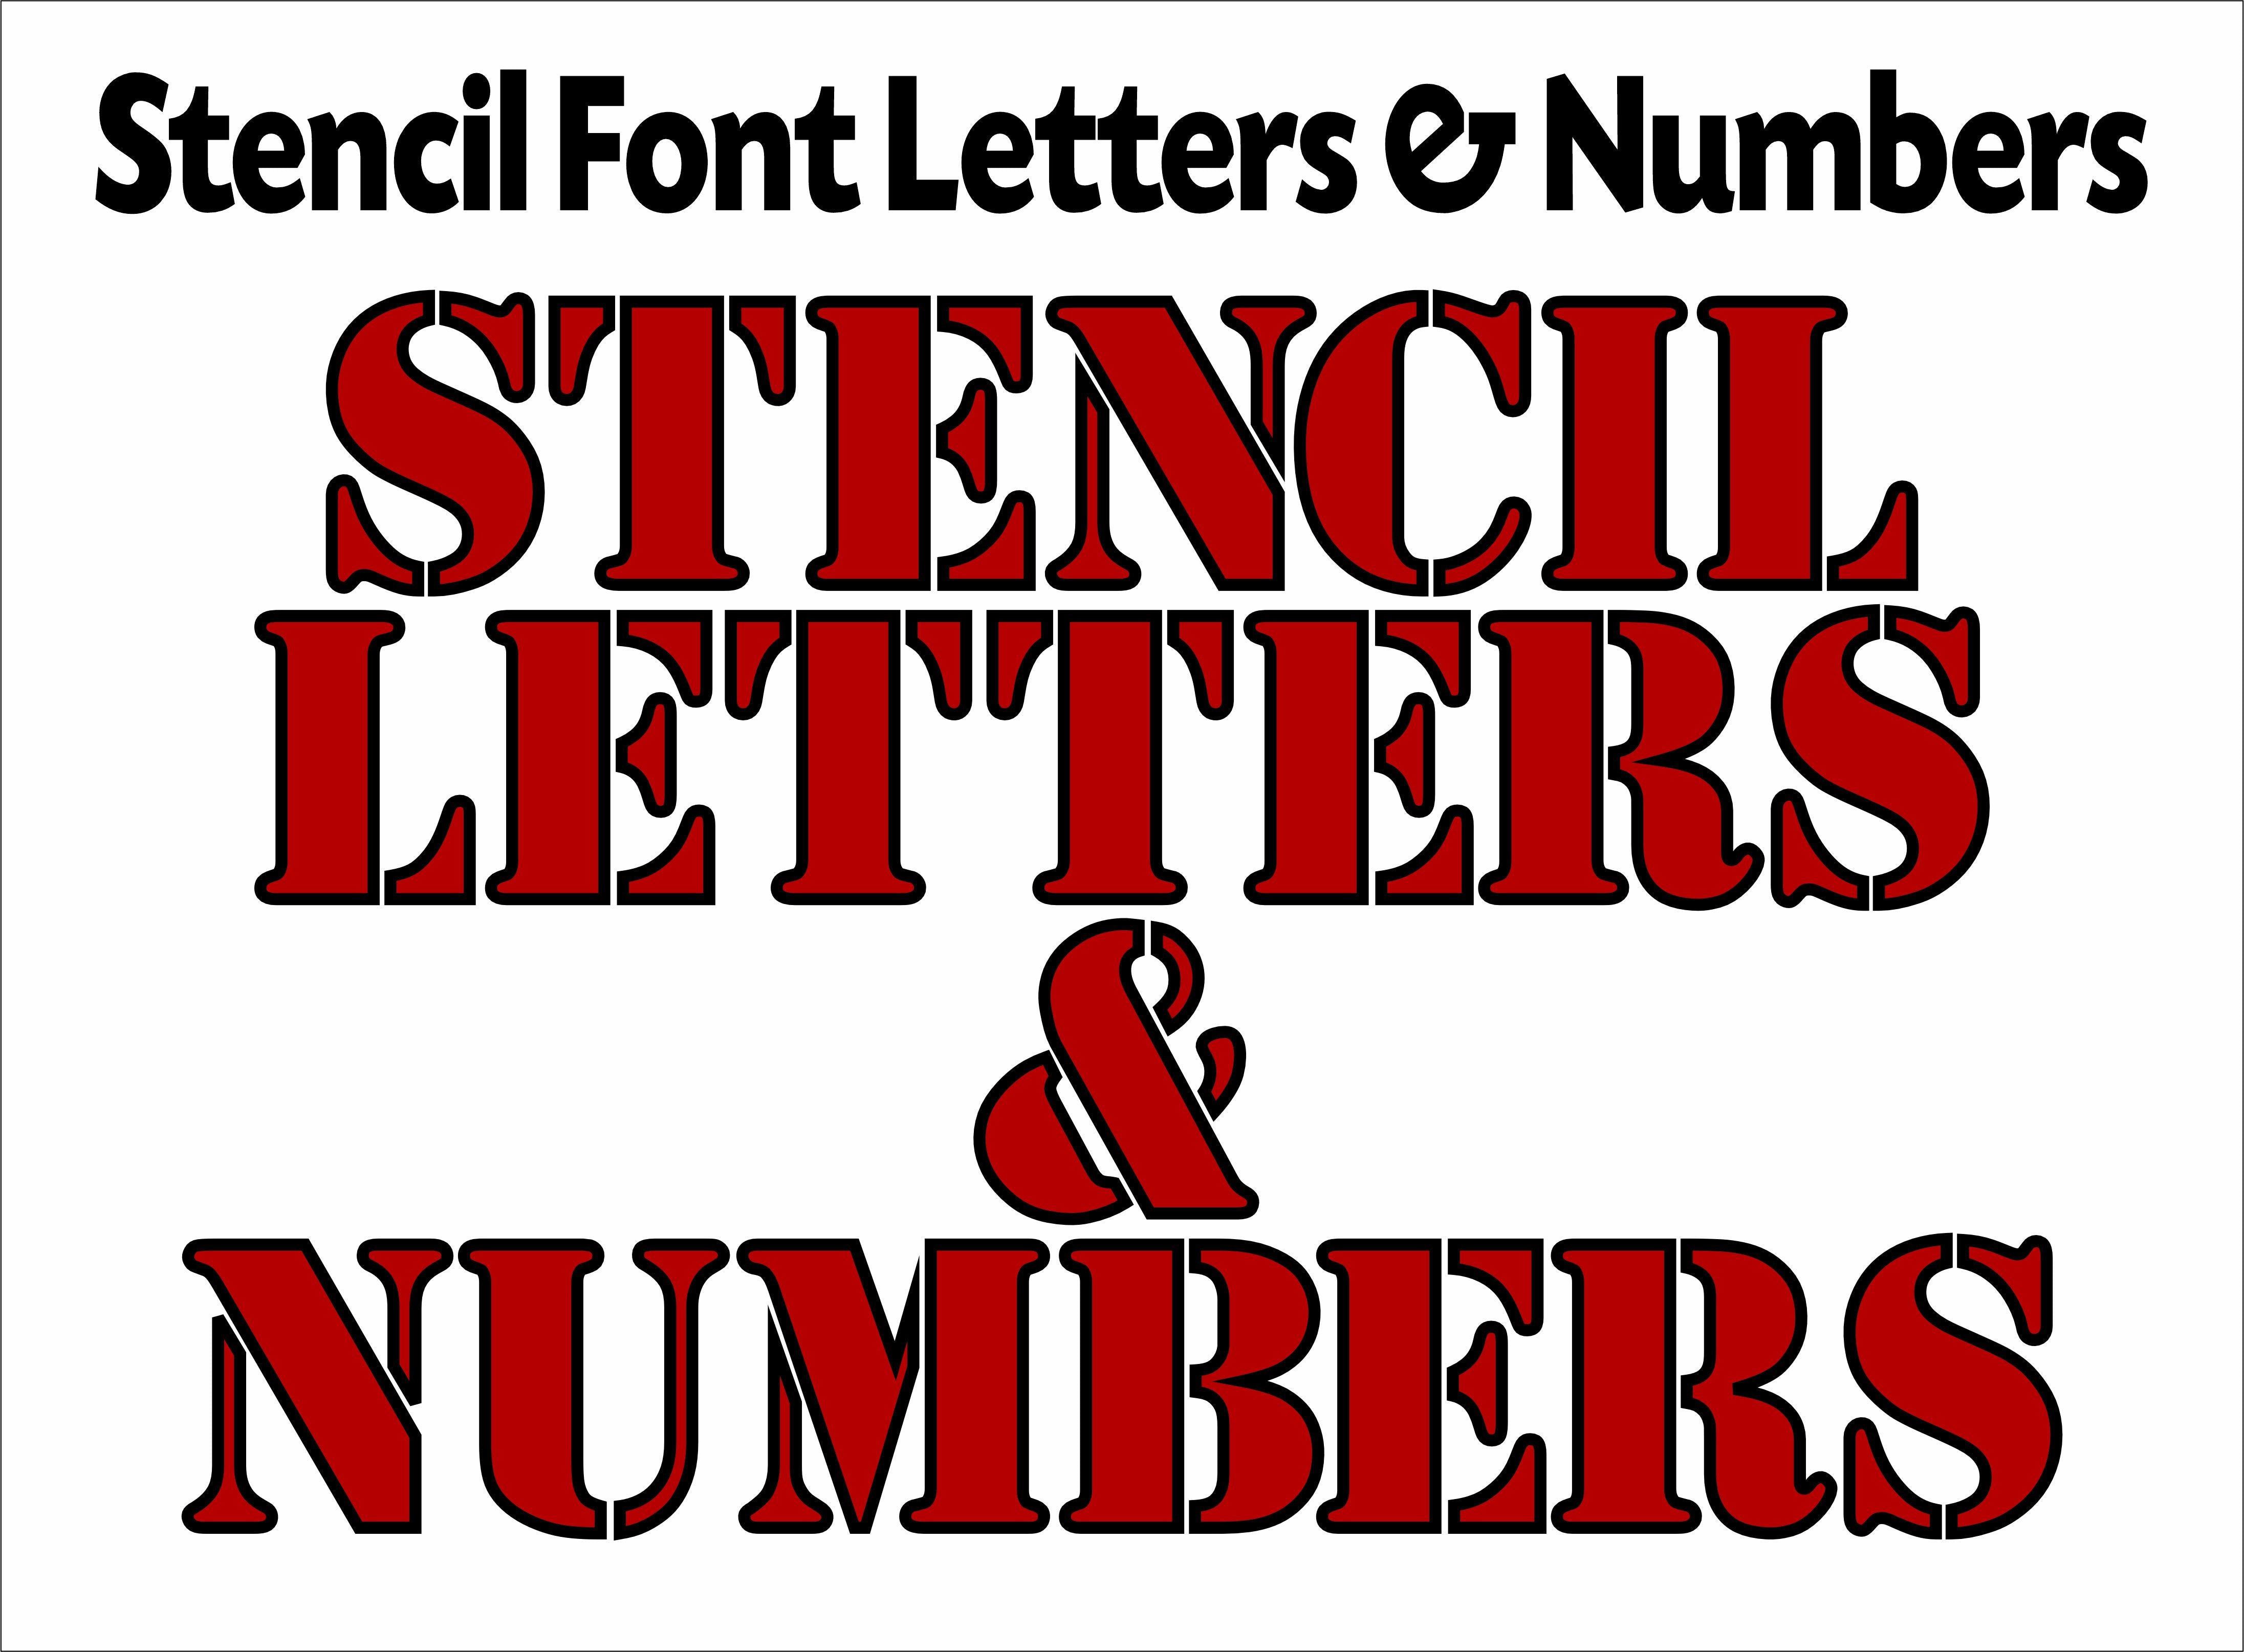 1 inch stencil letter a  Free stencils printables, Letter stencils,  Stencils printables